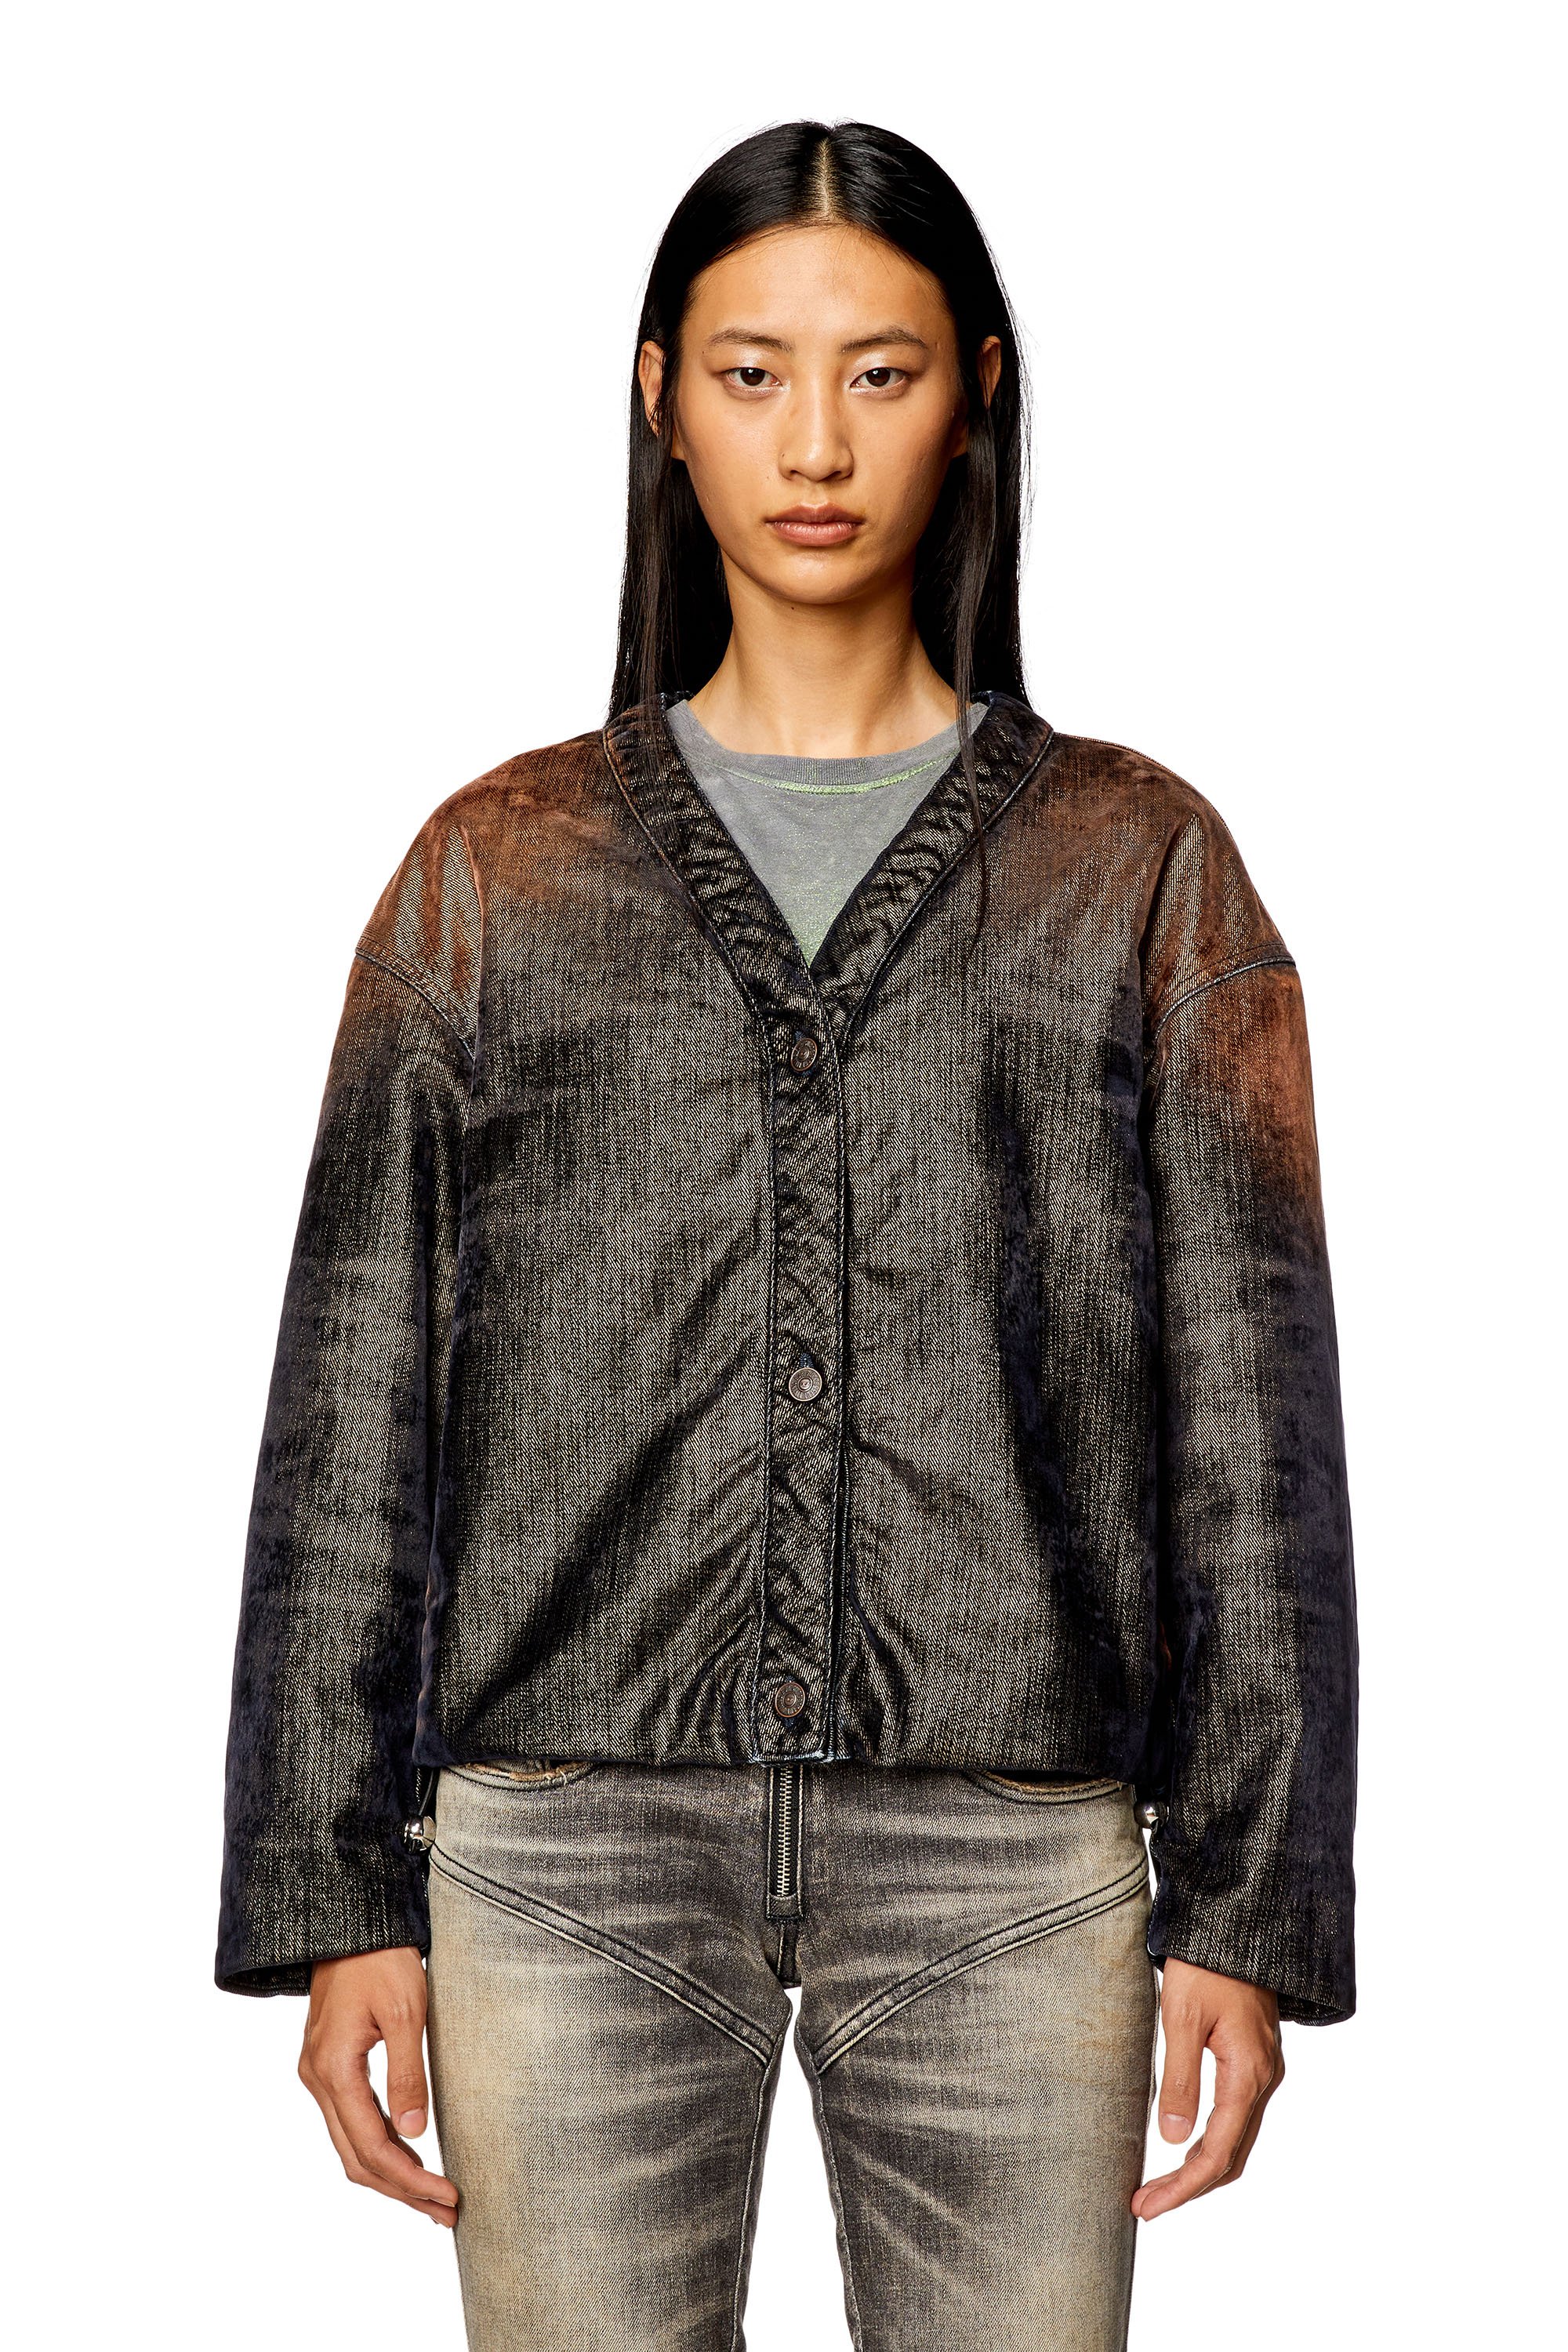 Diesel - DE-CONF-S, Female Jacket in shimmery denim in Multicolor - Image 5